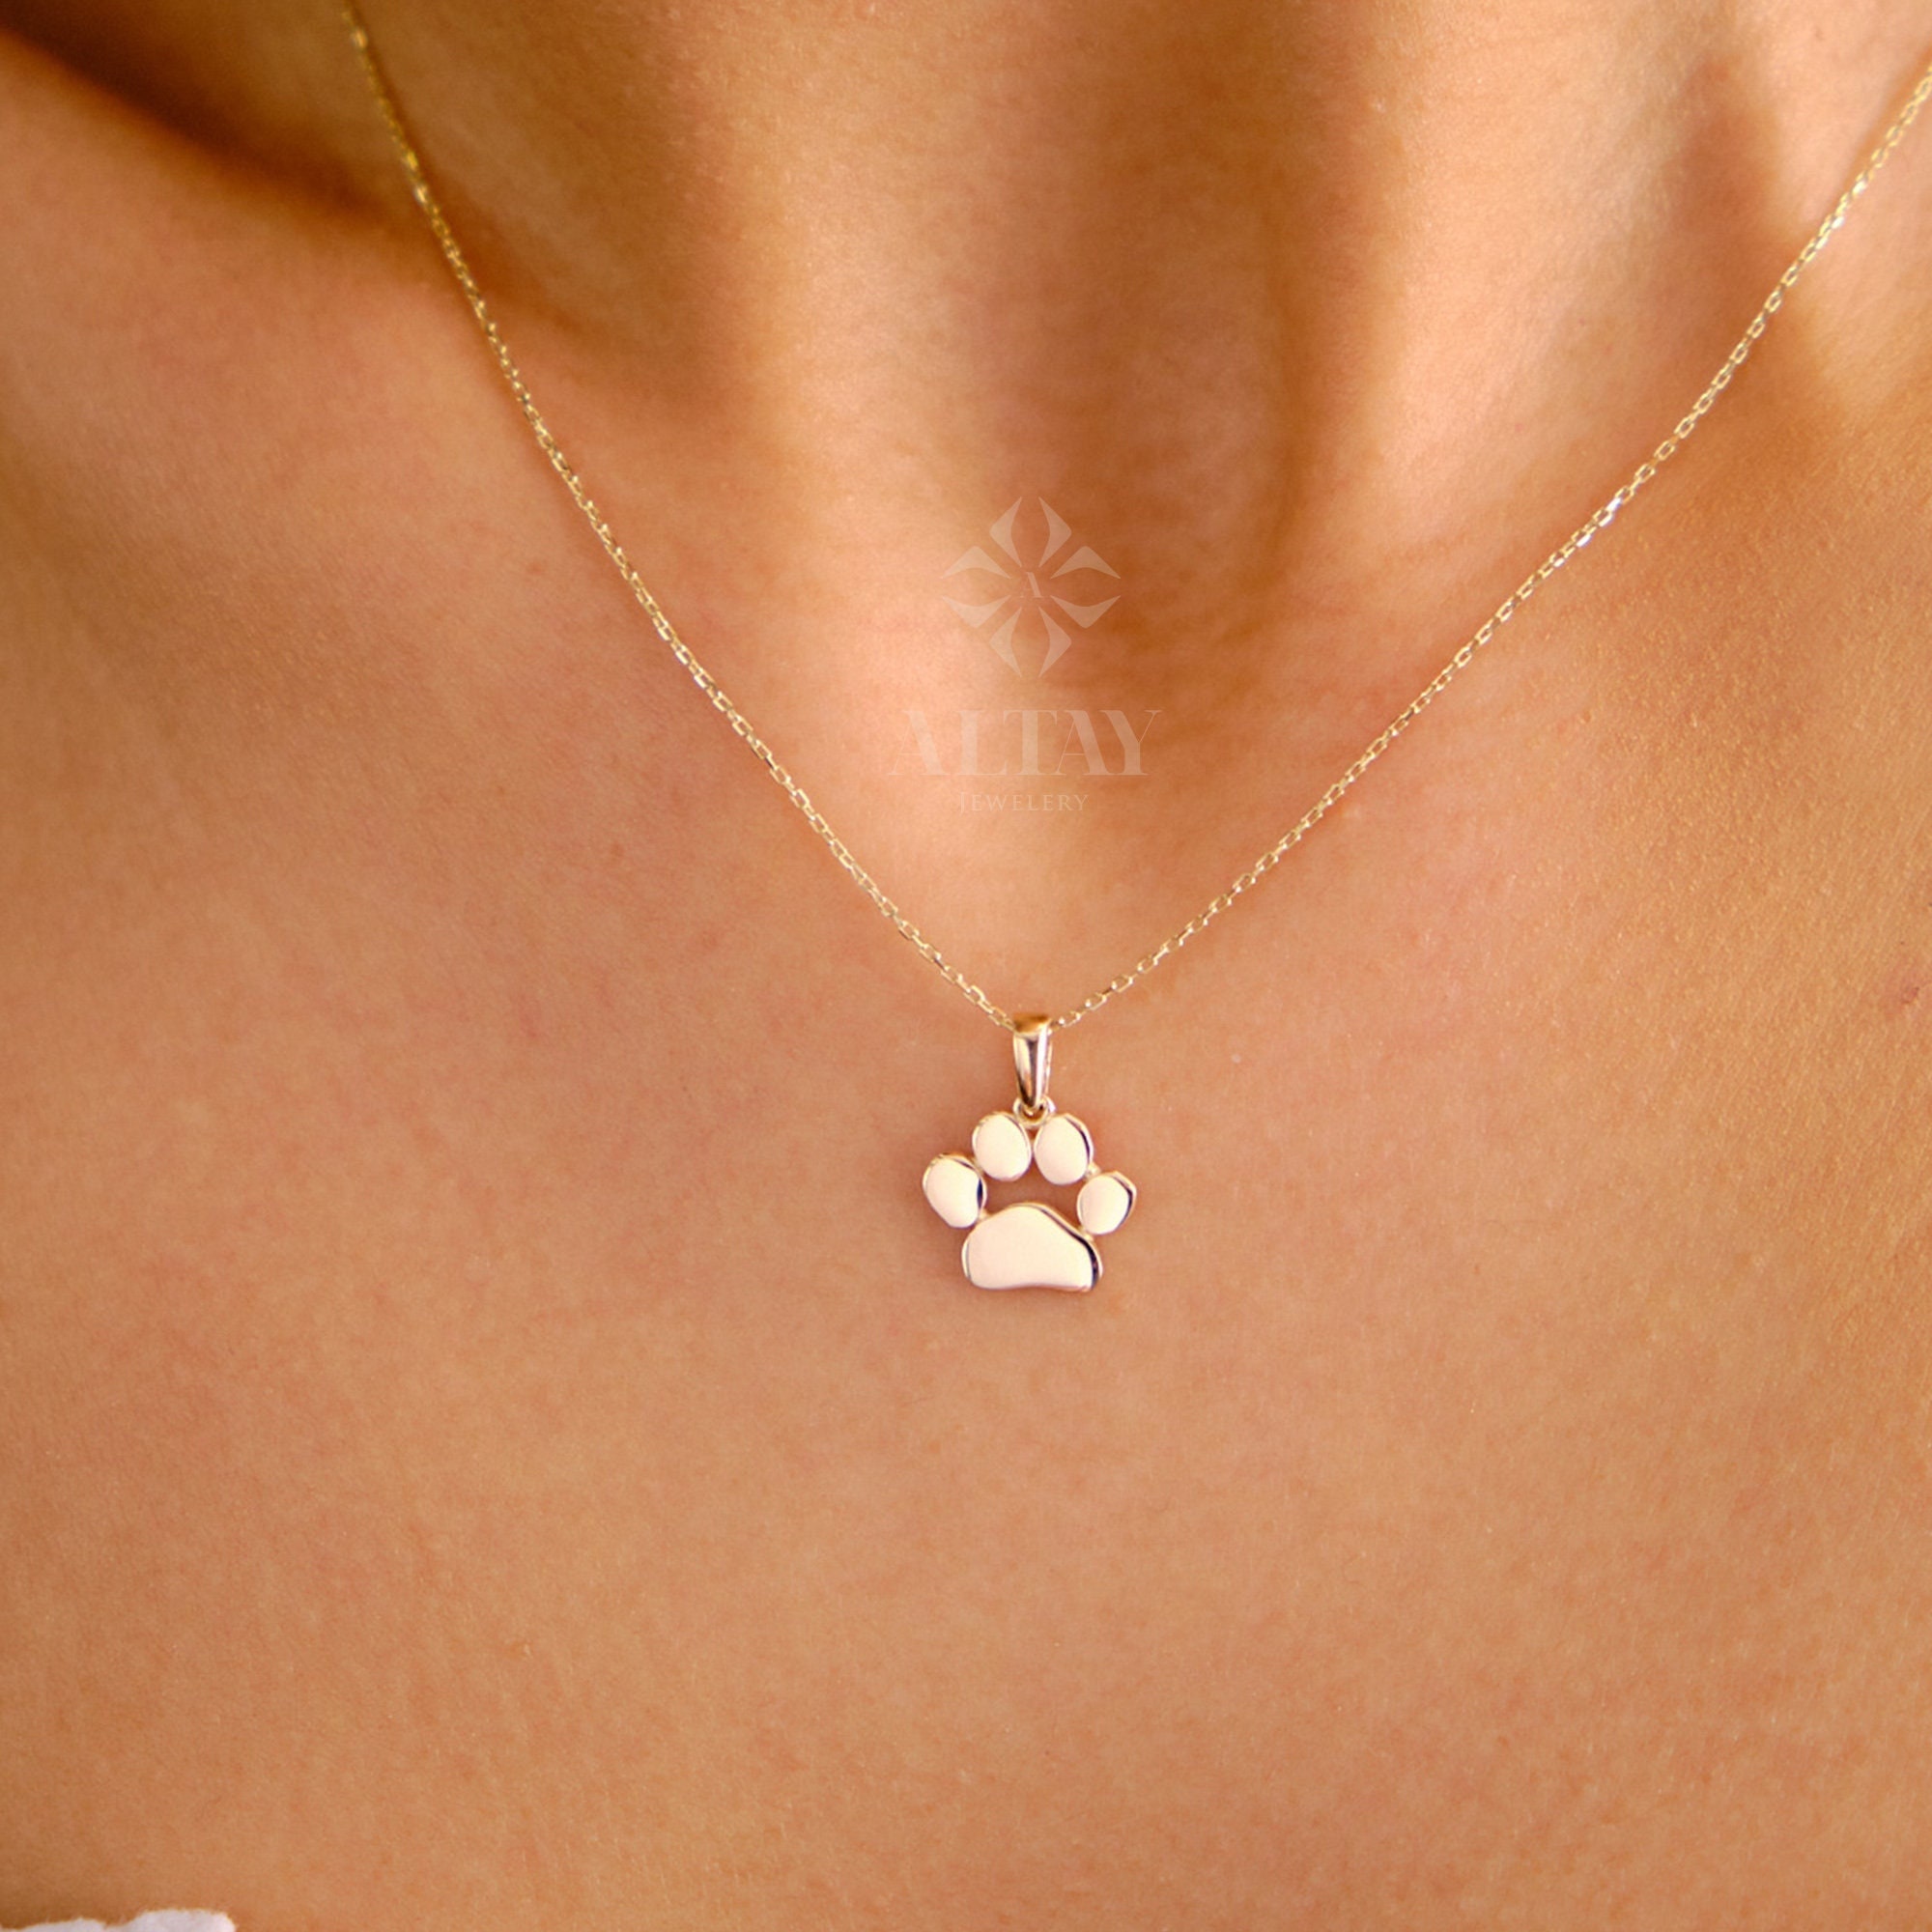 Furever Paw Print Necklace | Paw print necklace, Paw print pendant, Park  lane jewelry